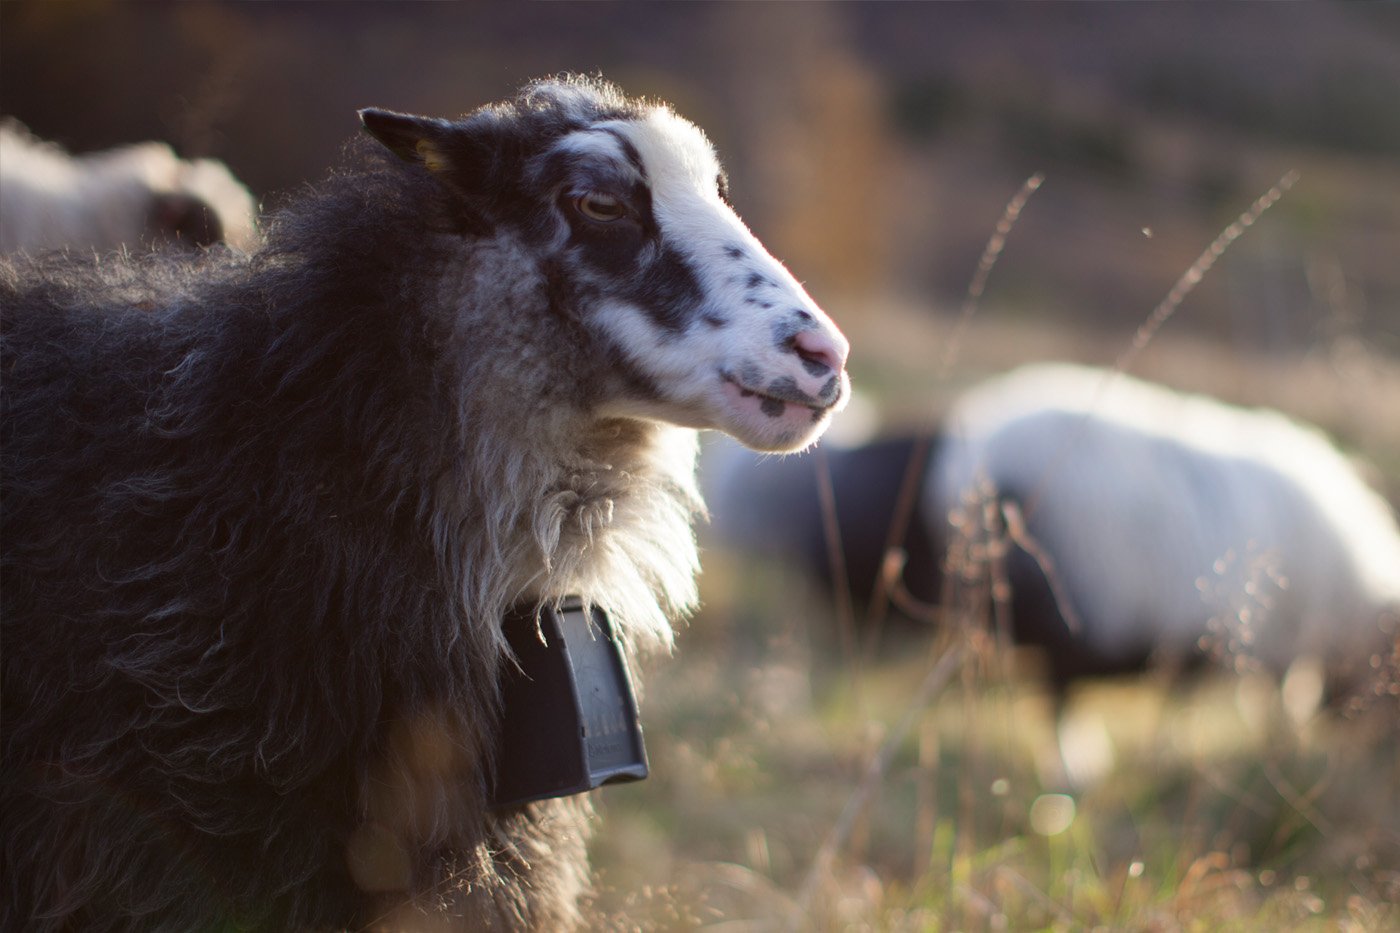 Sheep with collar